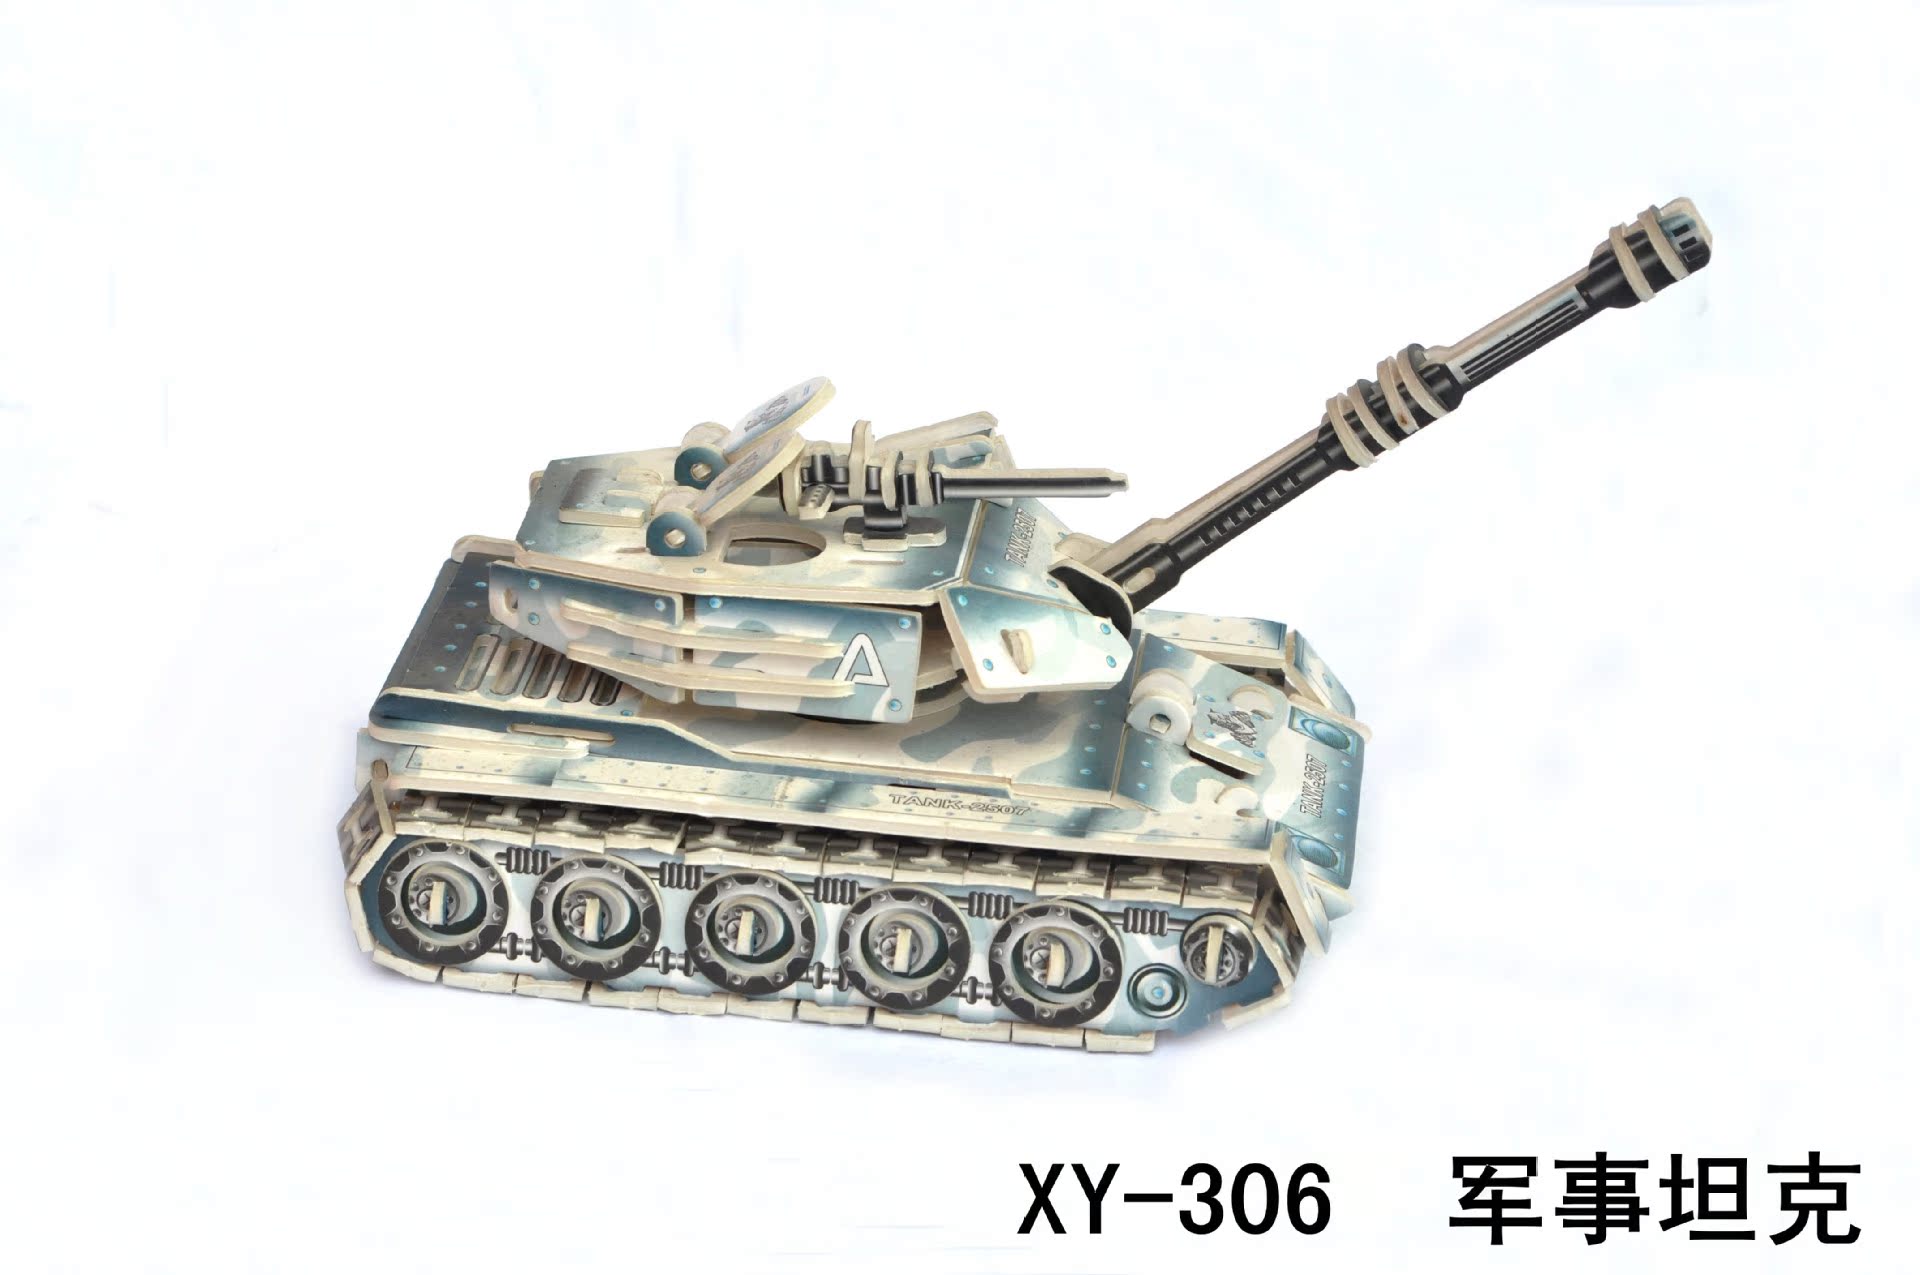 XY-306 Military tanks_副本